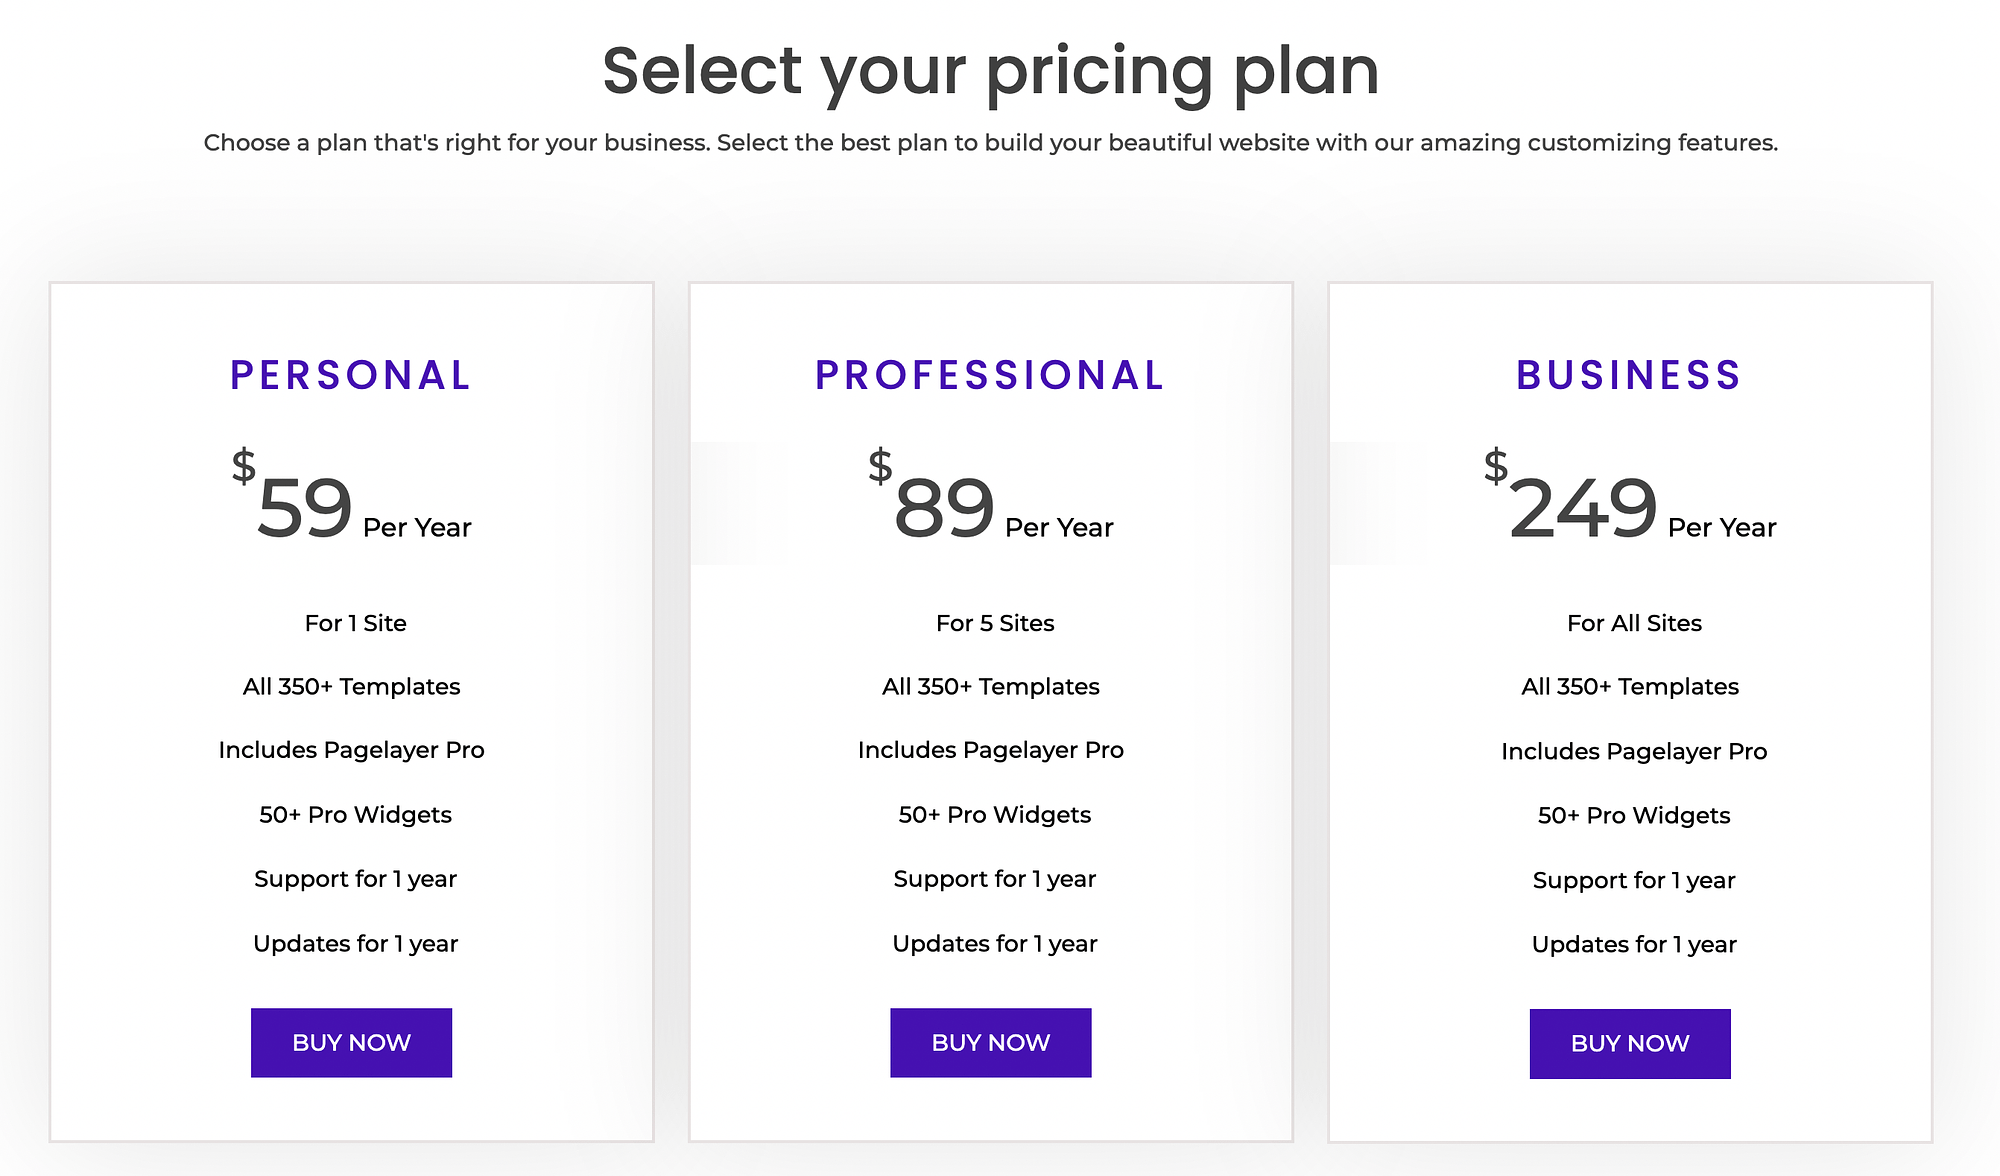 PopularFX theme's pricing plans.